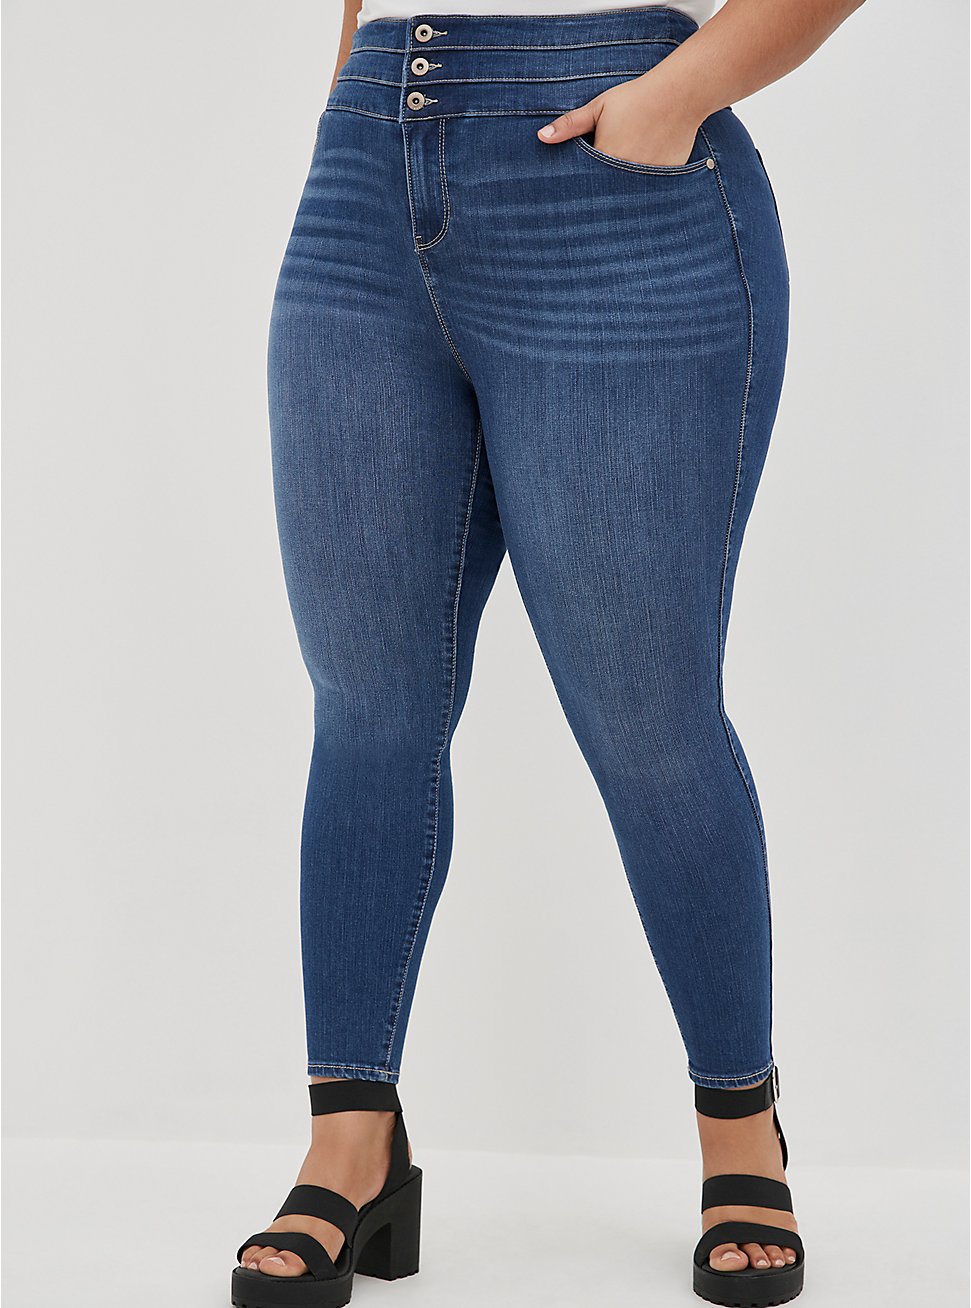 Plus Size Triple Waistband Skinny Jean - Premium Stretch Medium Wash, UPSTATE, hi-res